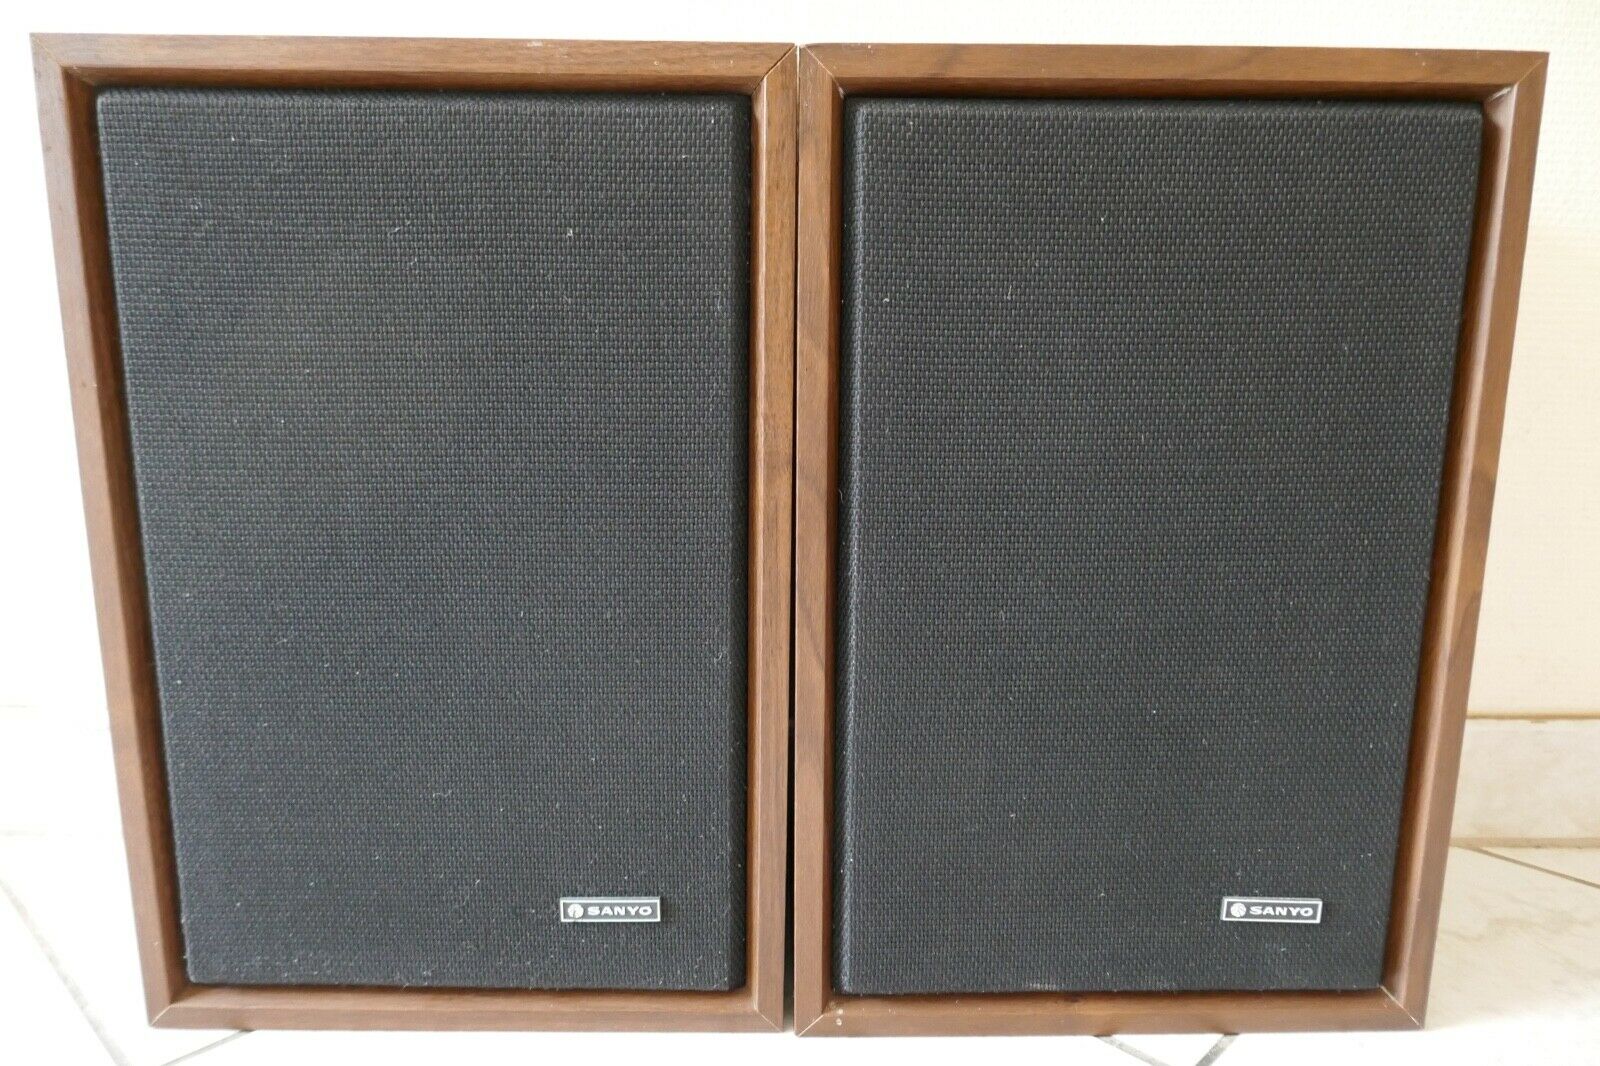 enceintes speakers sanyo SX-807 vintage occasion